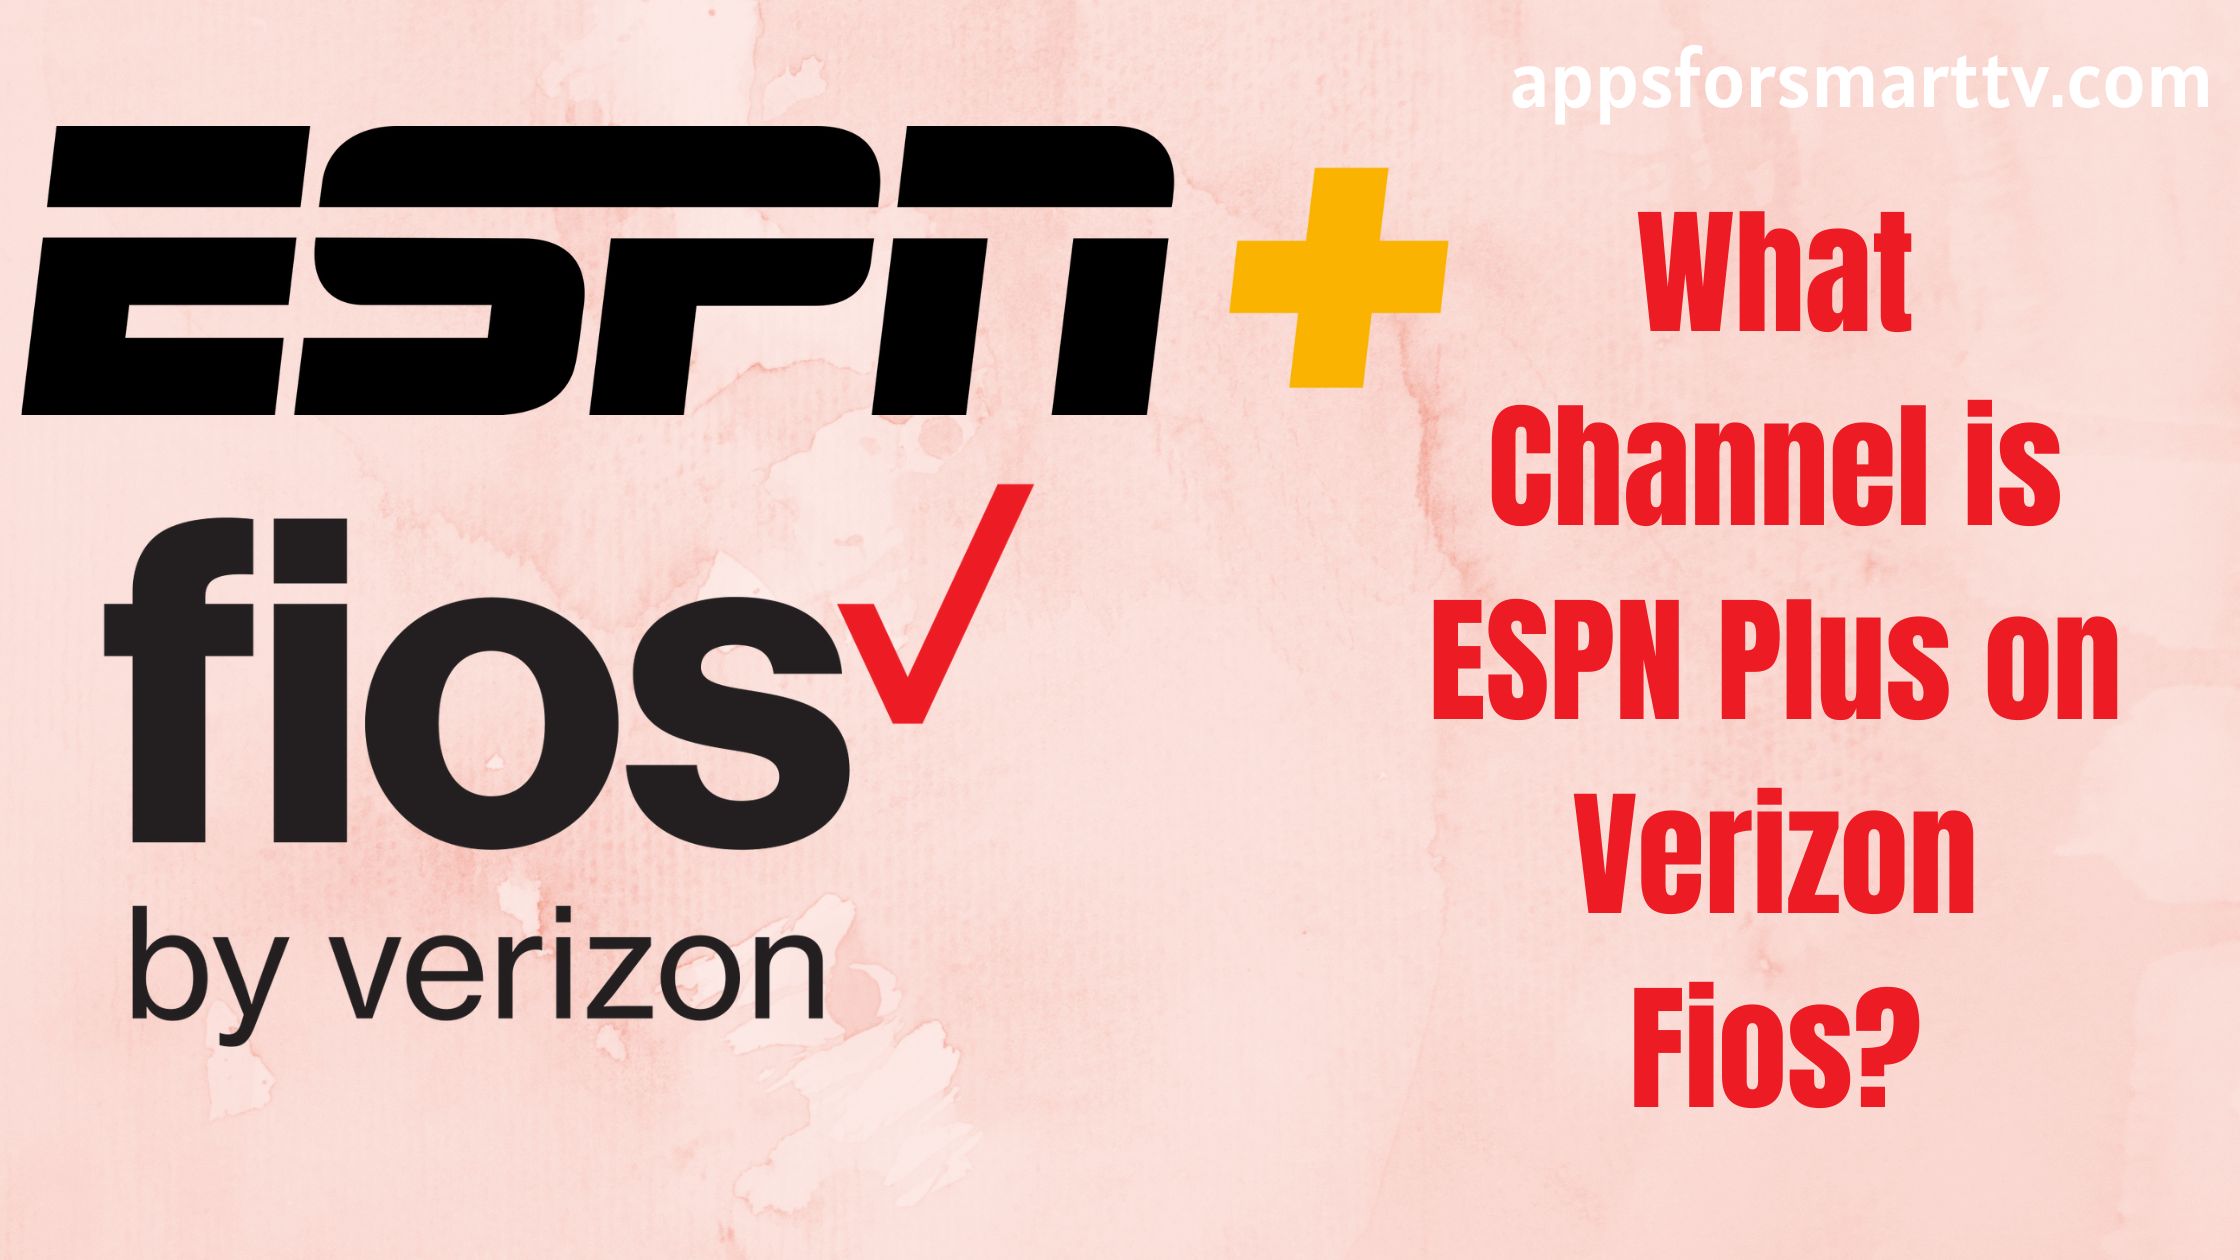 What Channel is ESPN Plus on Verizon Fios?